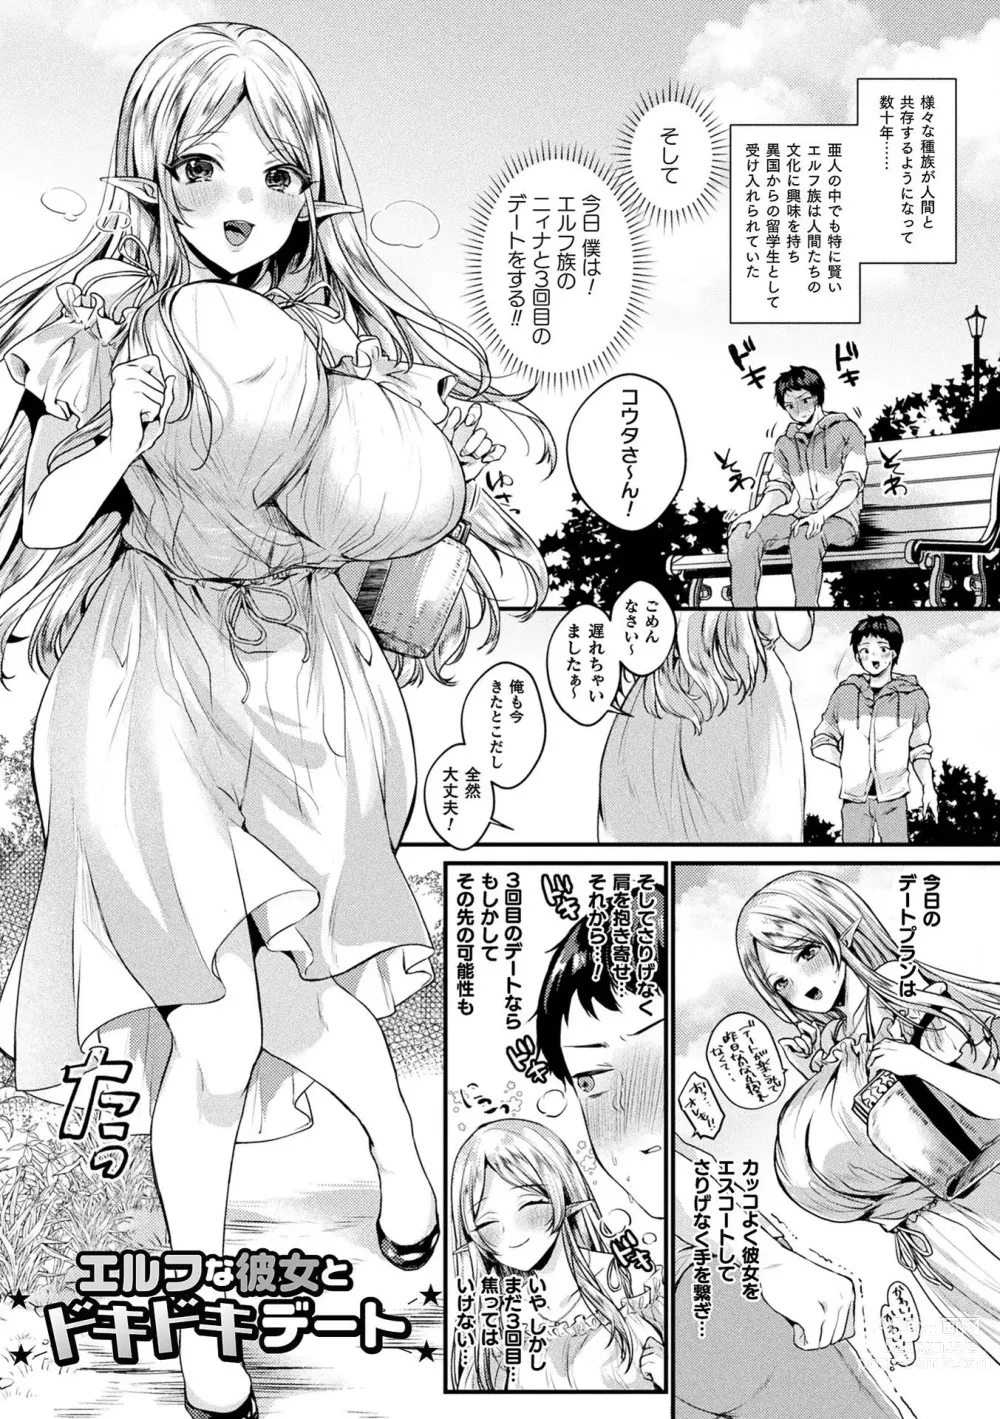 Page 5 of manga Toromitsu Ecstasy